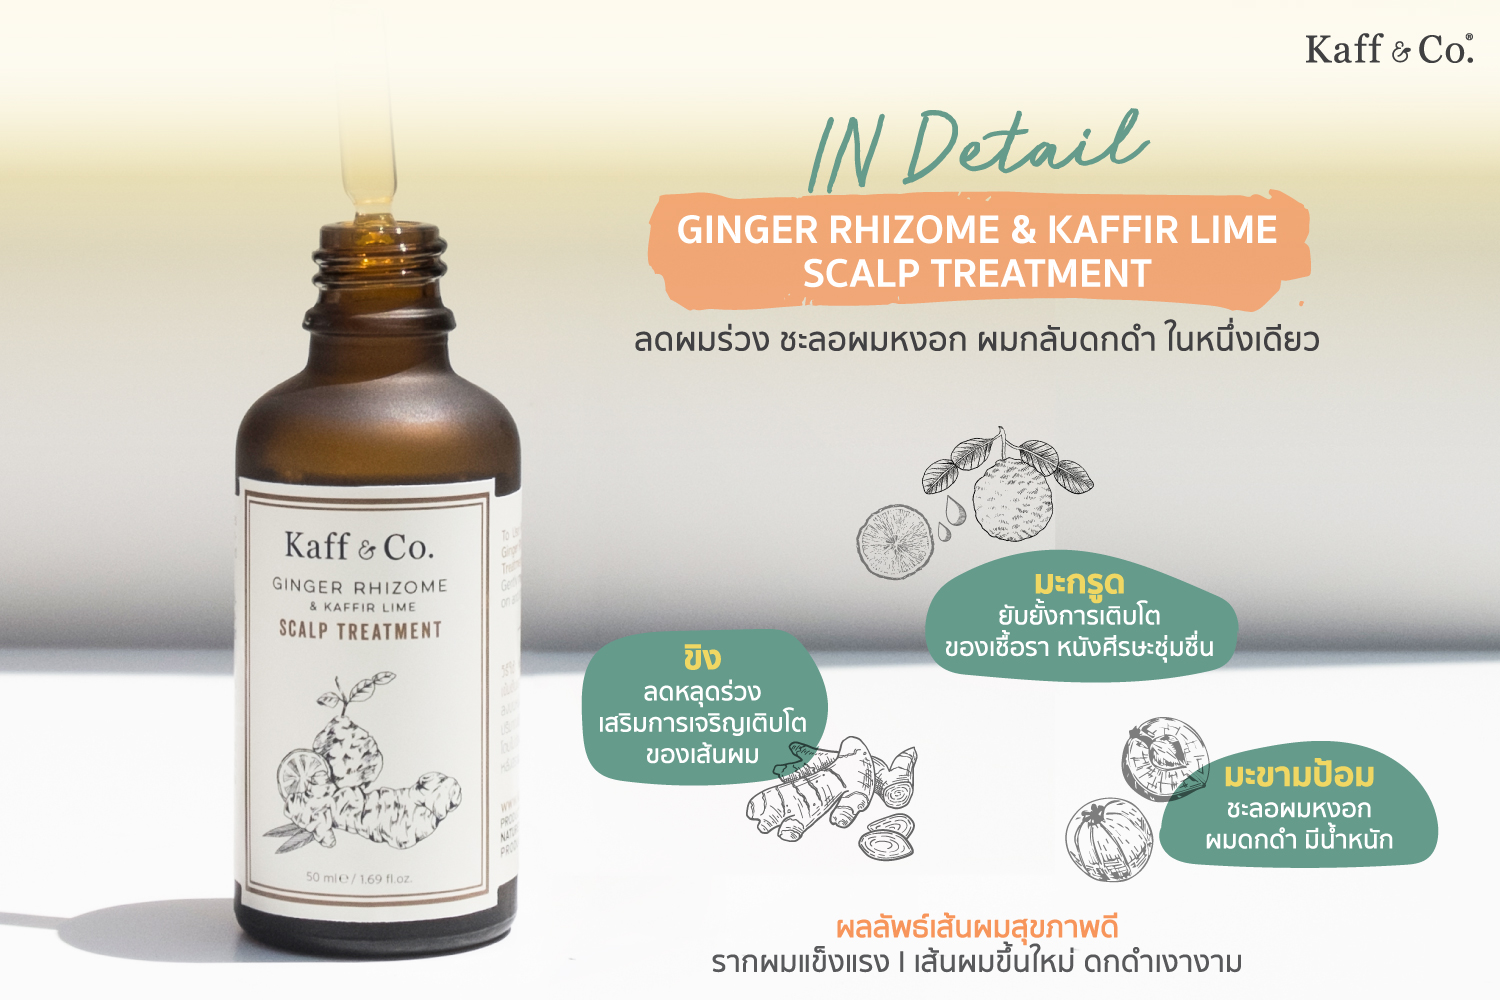 In detail Ginger Rhizome & Kaffir Lime Scalp Treatment